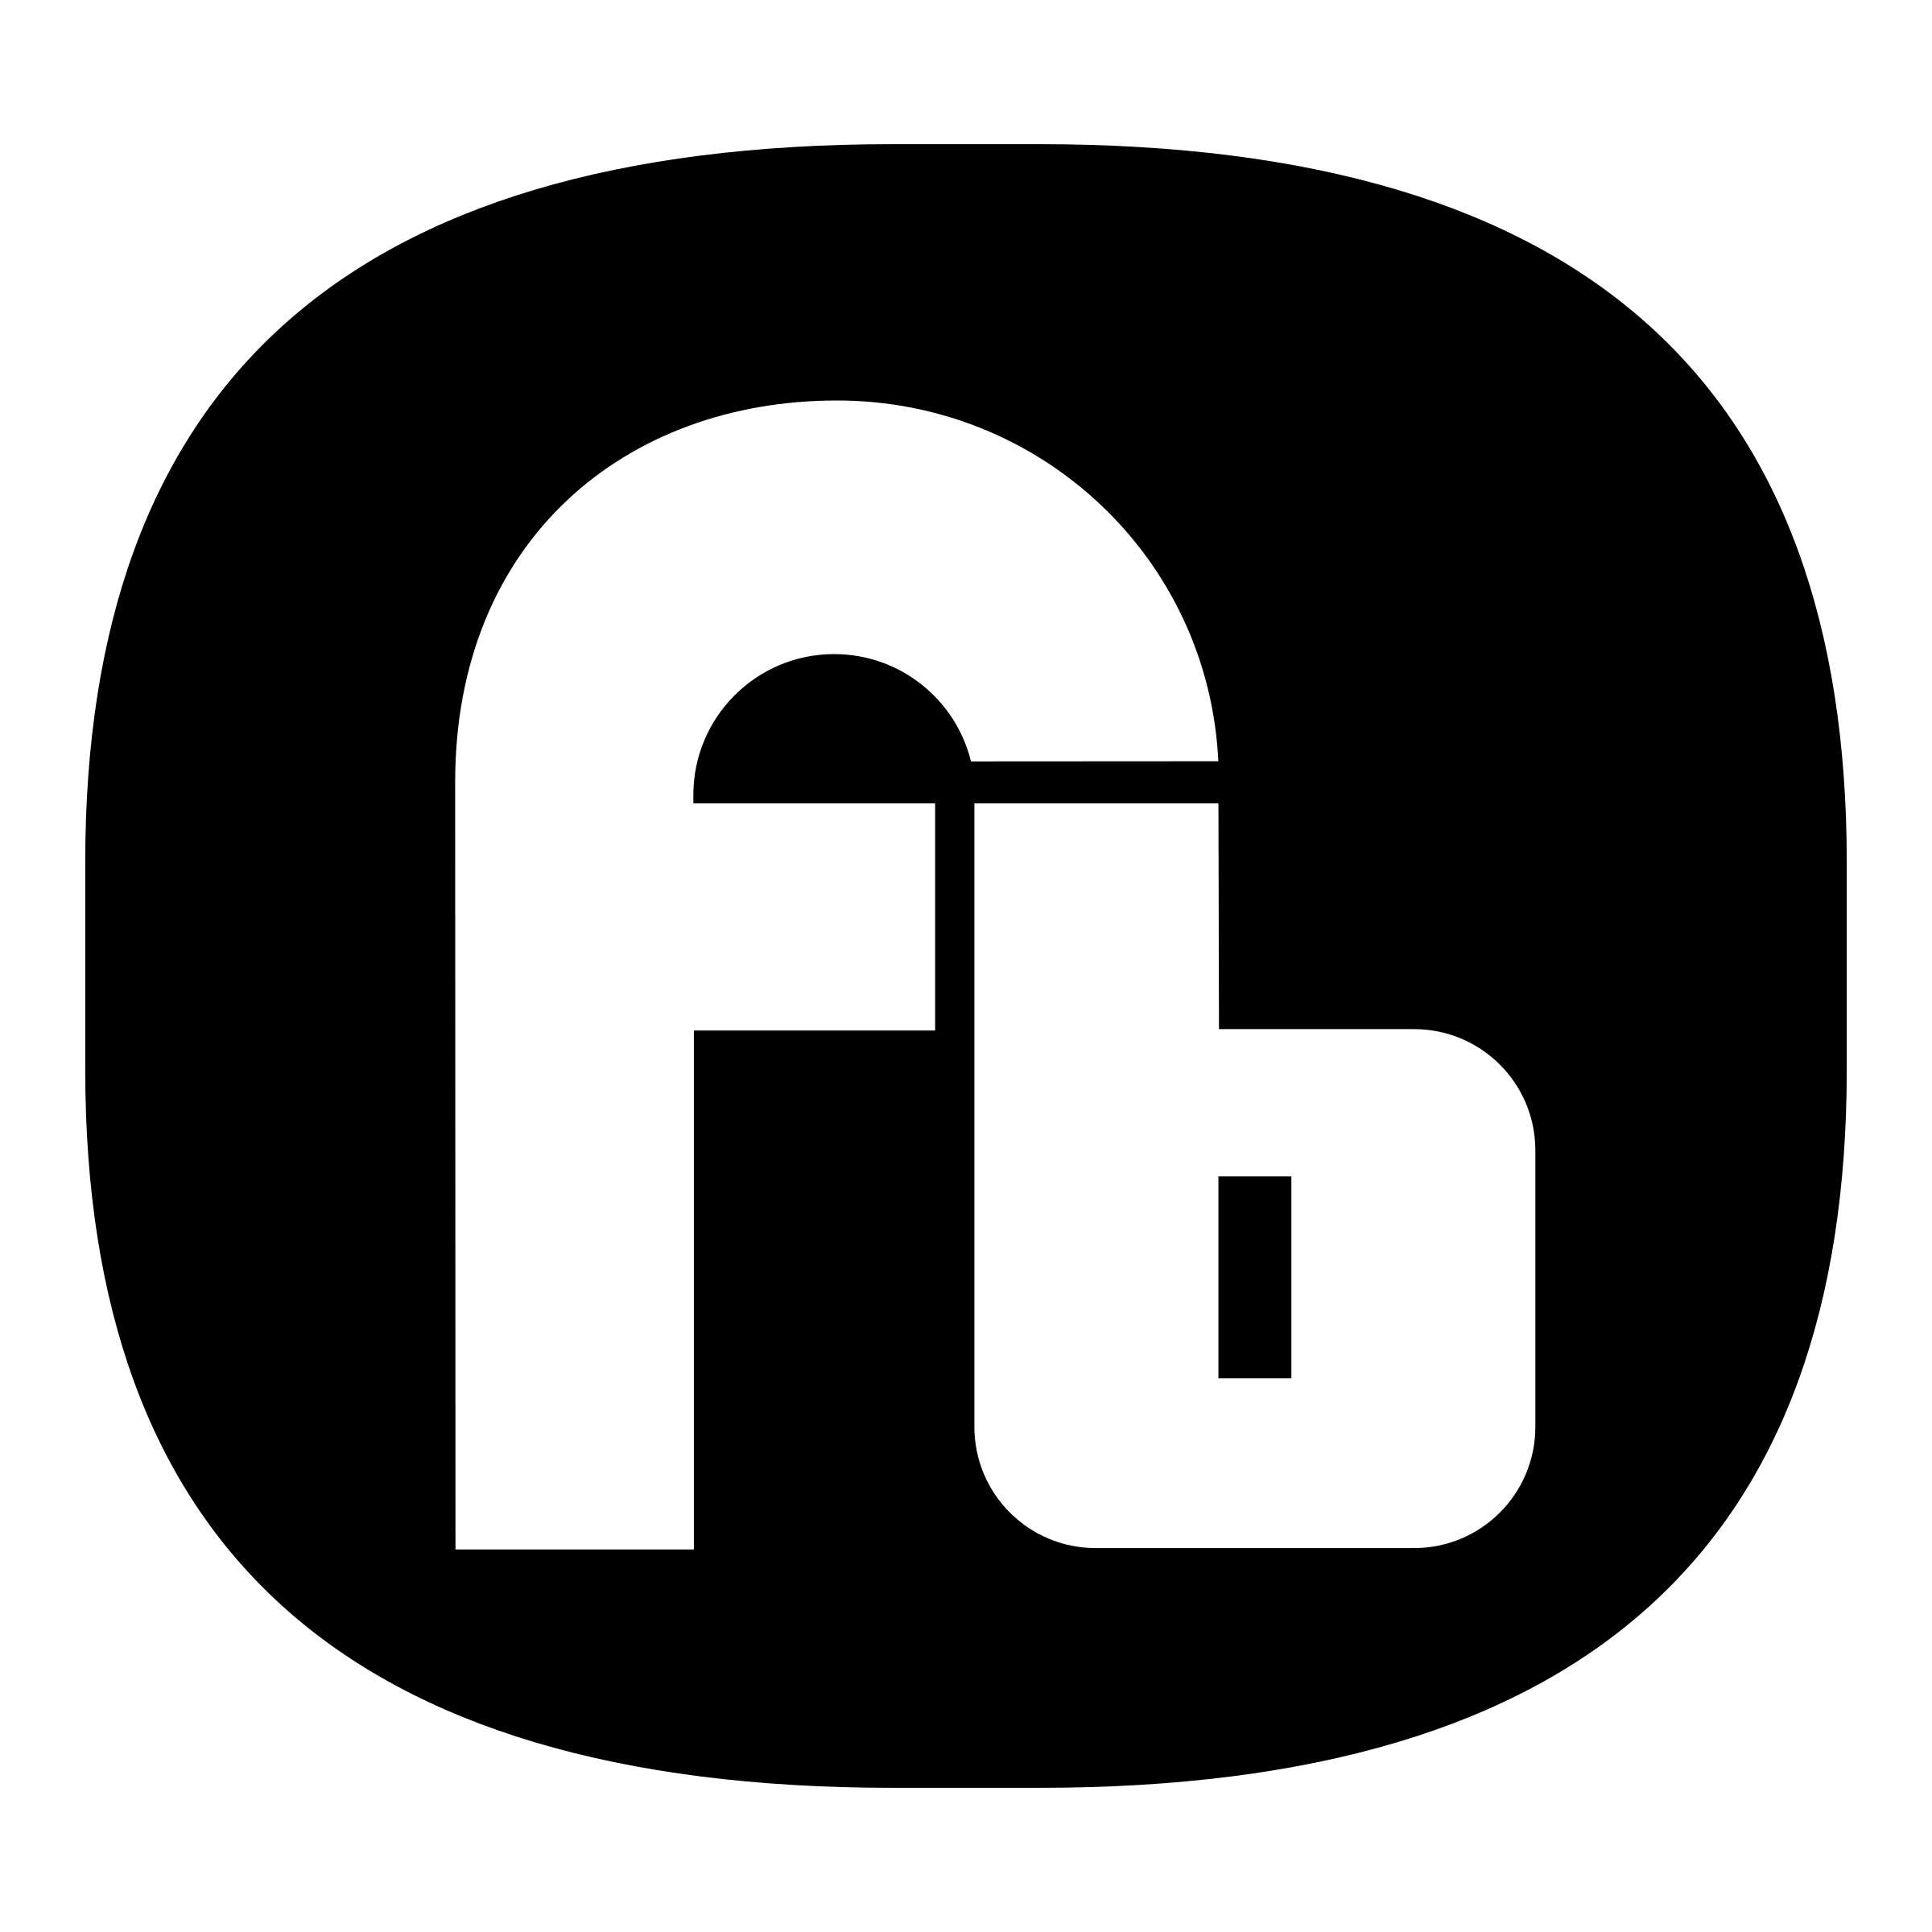 FB Logo - FB Logo PNG Transparent & SVG Vector - Freebie Supply